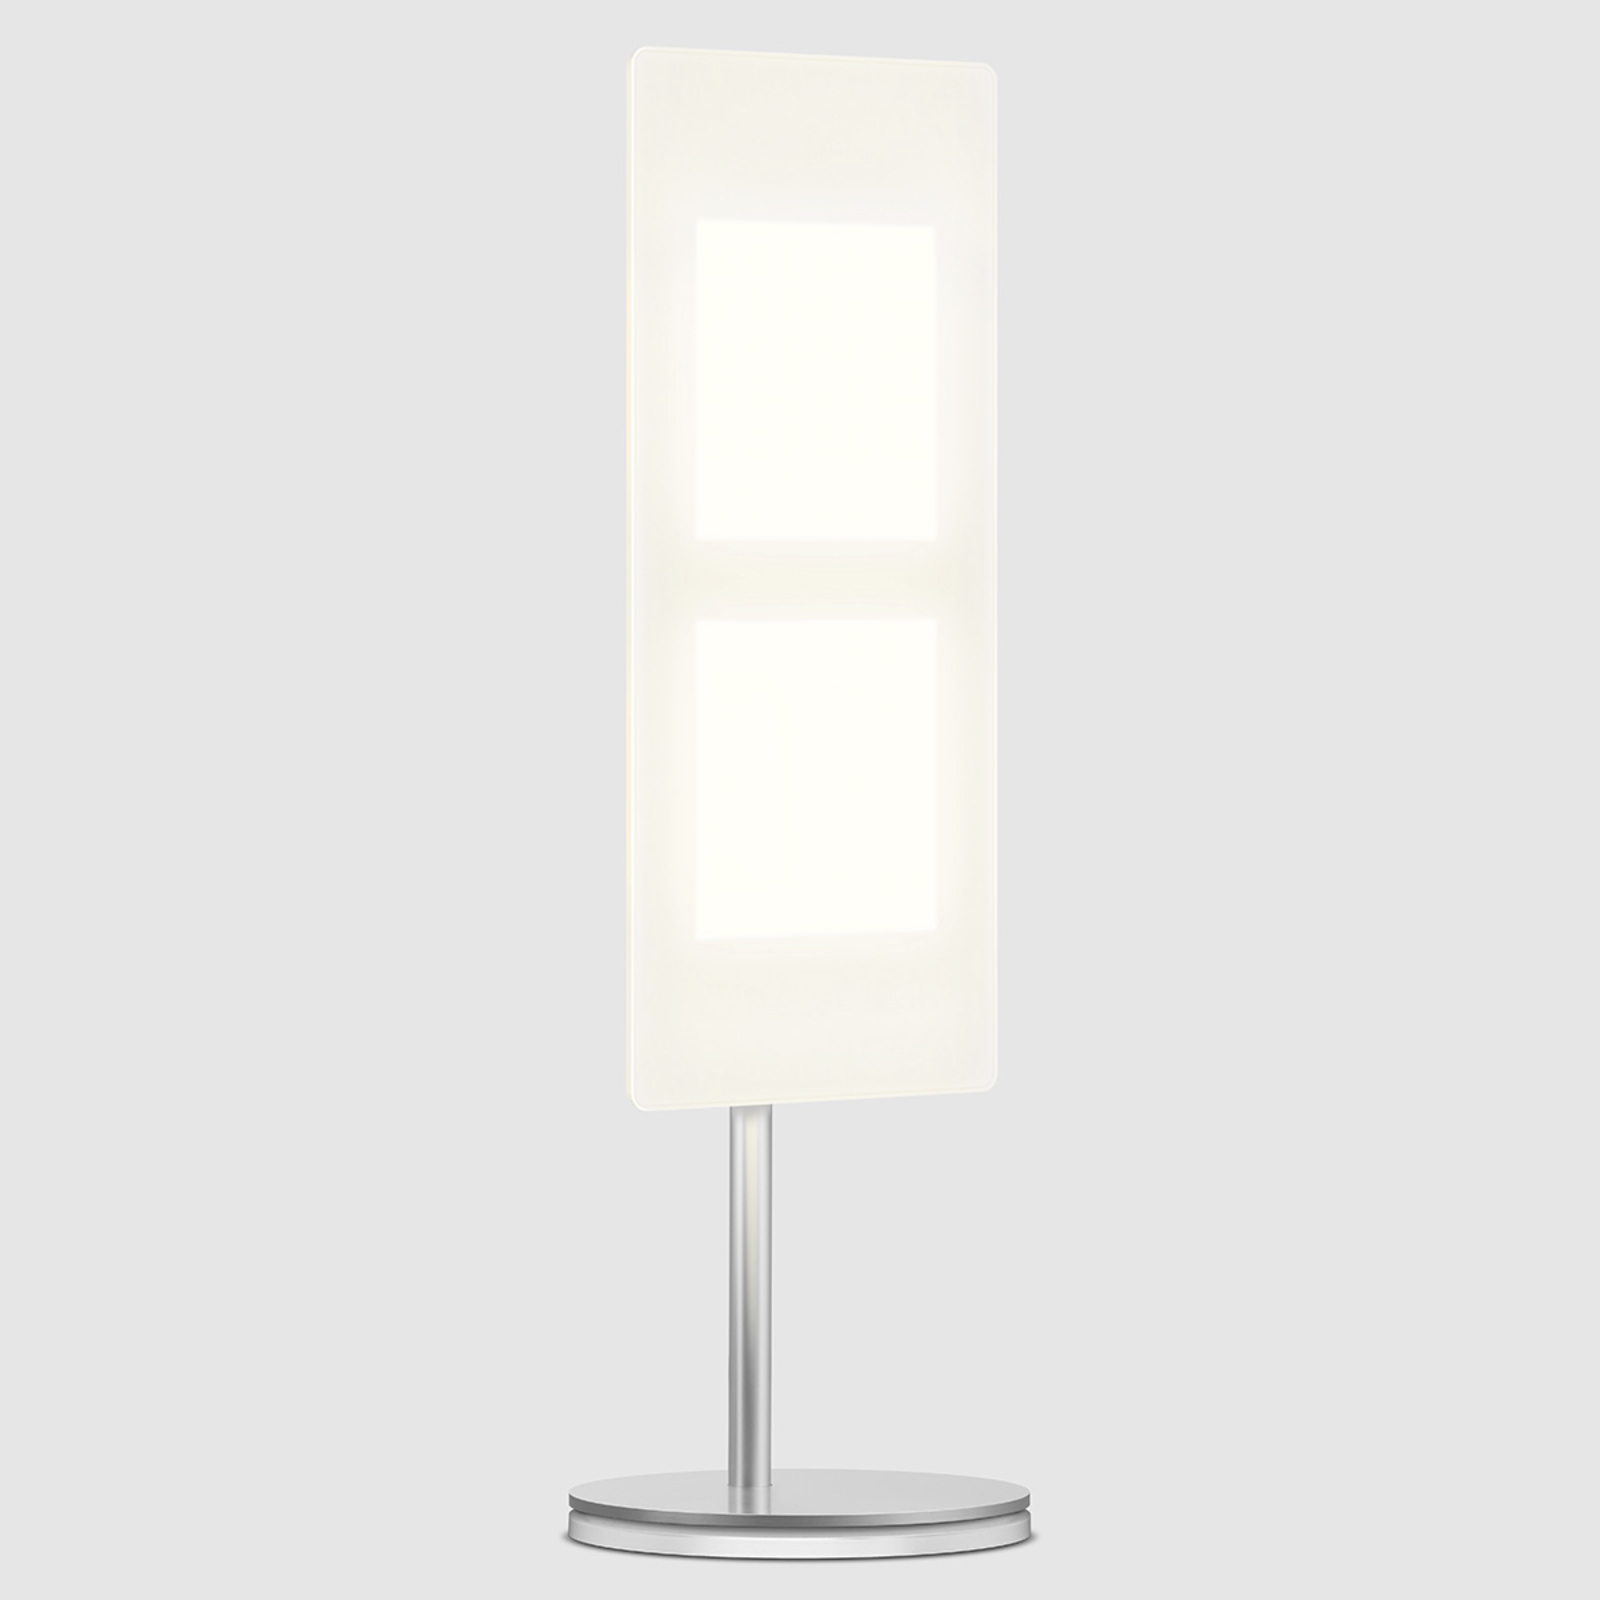 Lampada da tavolo alta 47,8 cm OMLED One t2 bianca